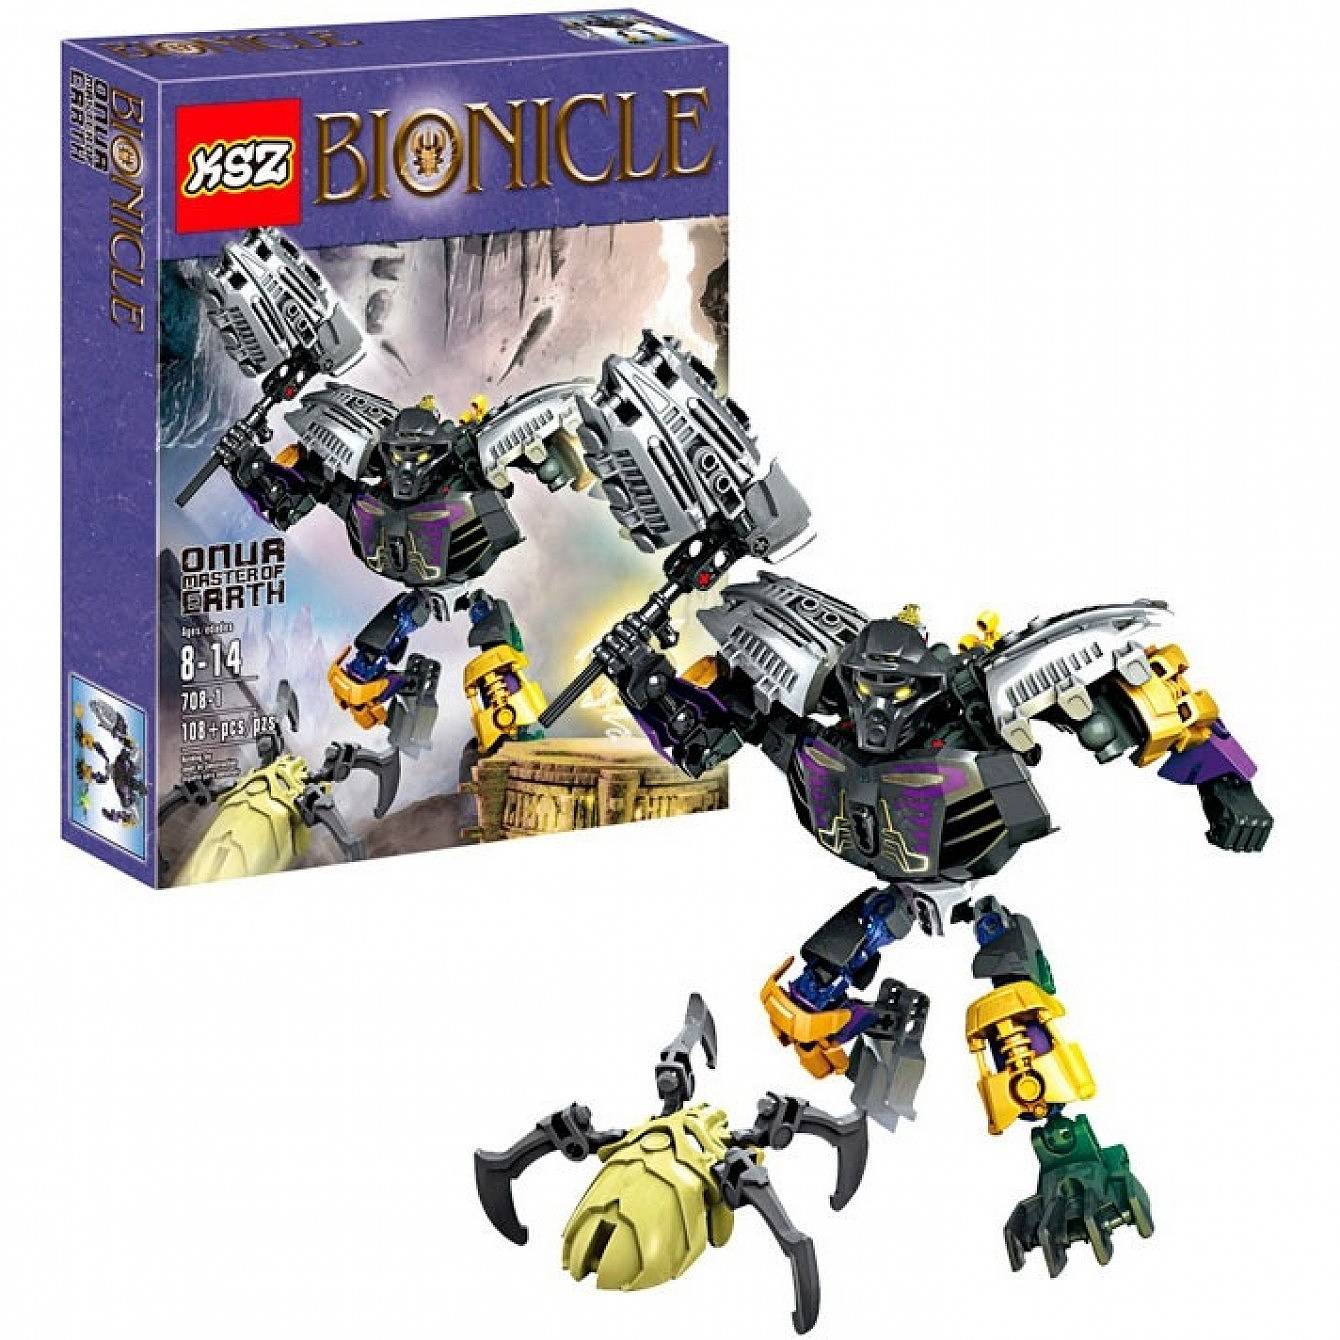 Конструктор KSZ Bionicle -Онуа повелитель земли 12876925 конструктор bionicle терак тотемное животное земли 609 5